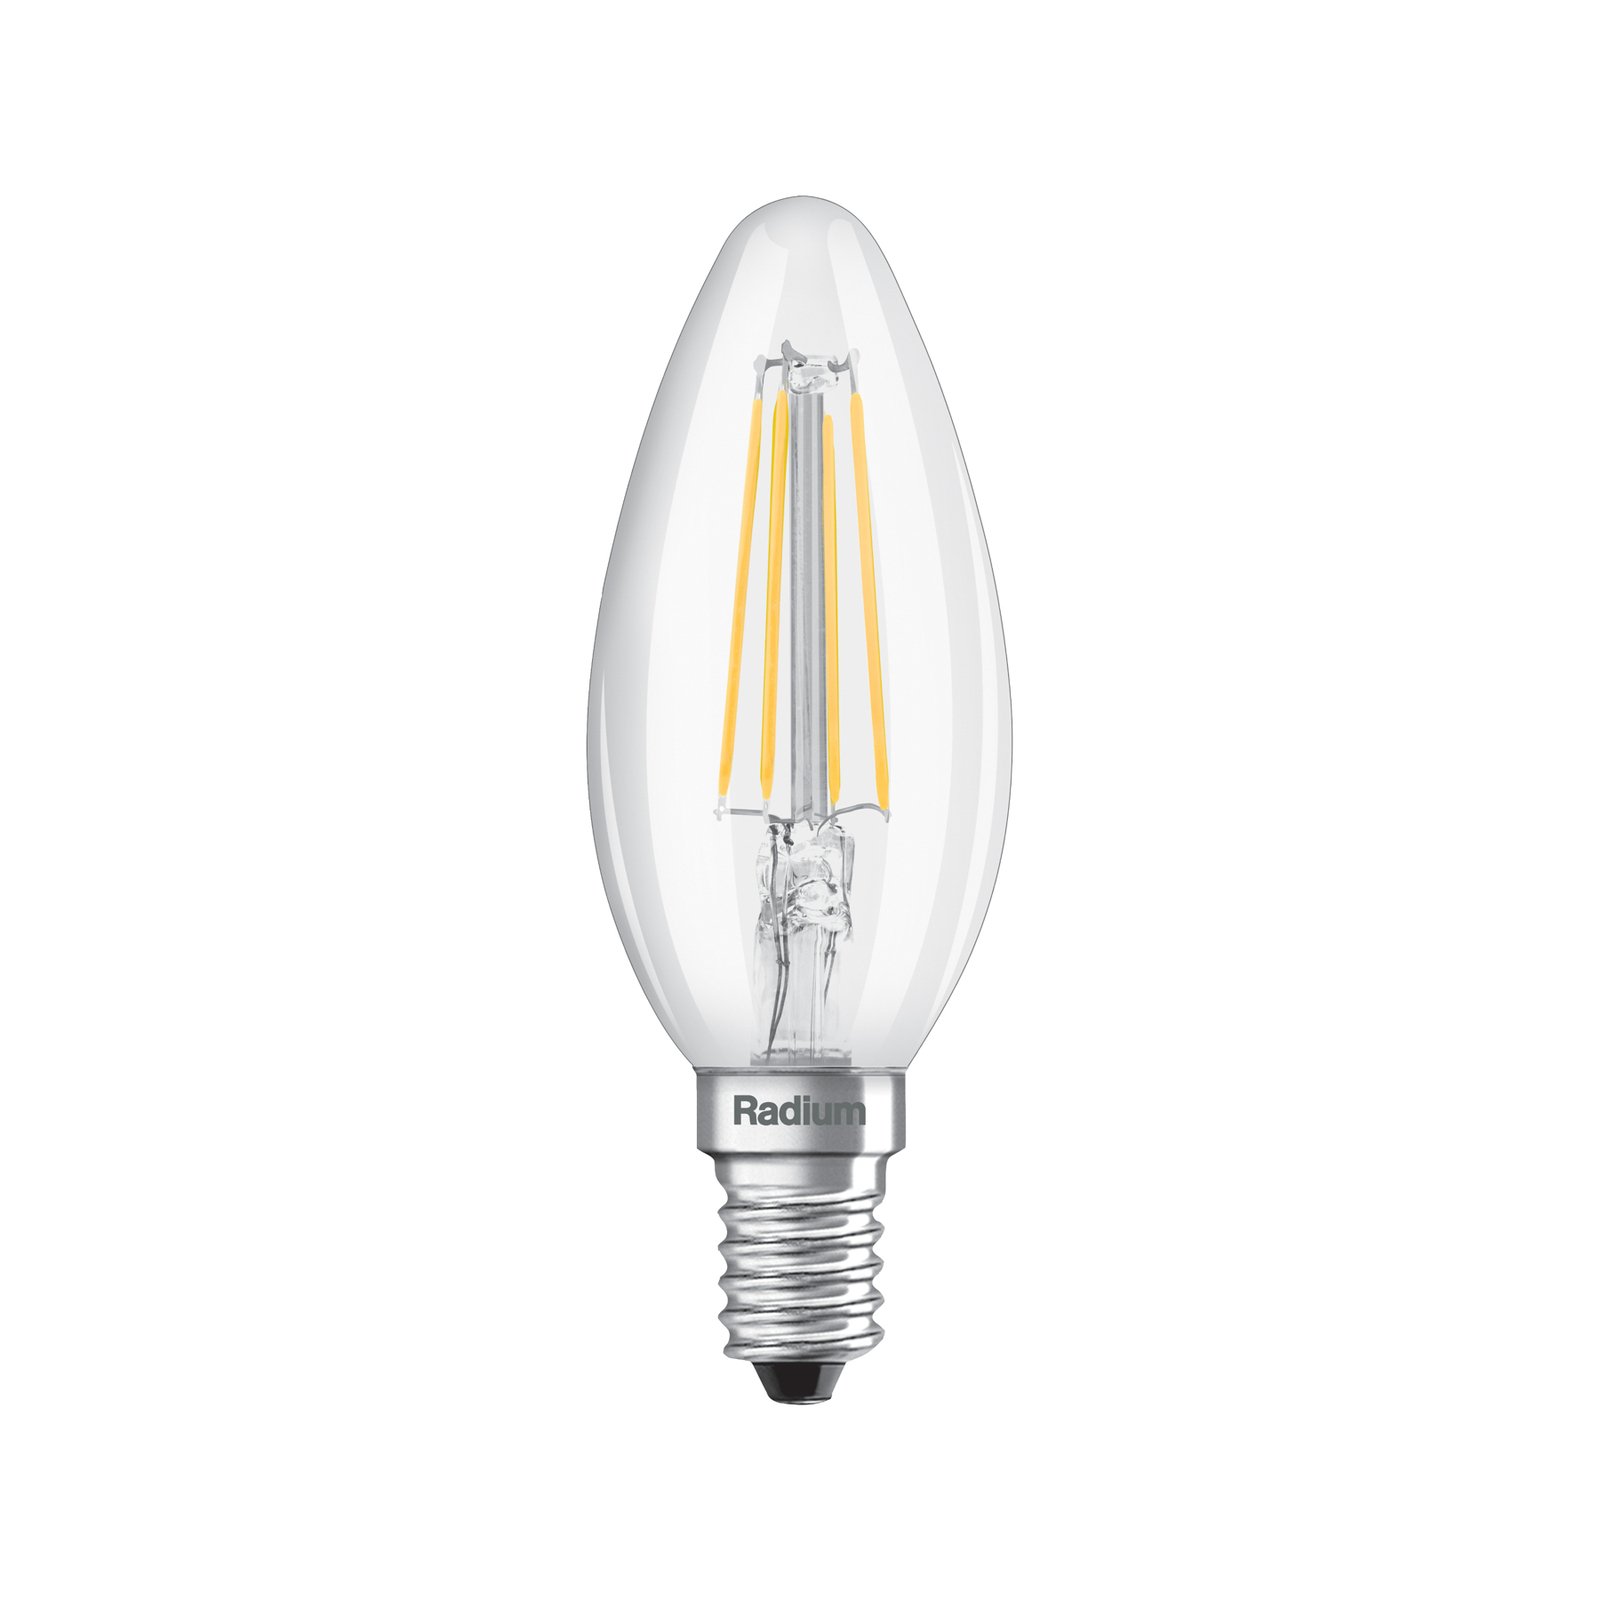 Radium LED stearinlyslampe Essence, glødetråd, E14 4W, 827, 470lm